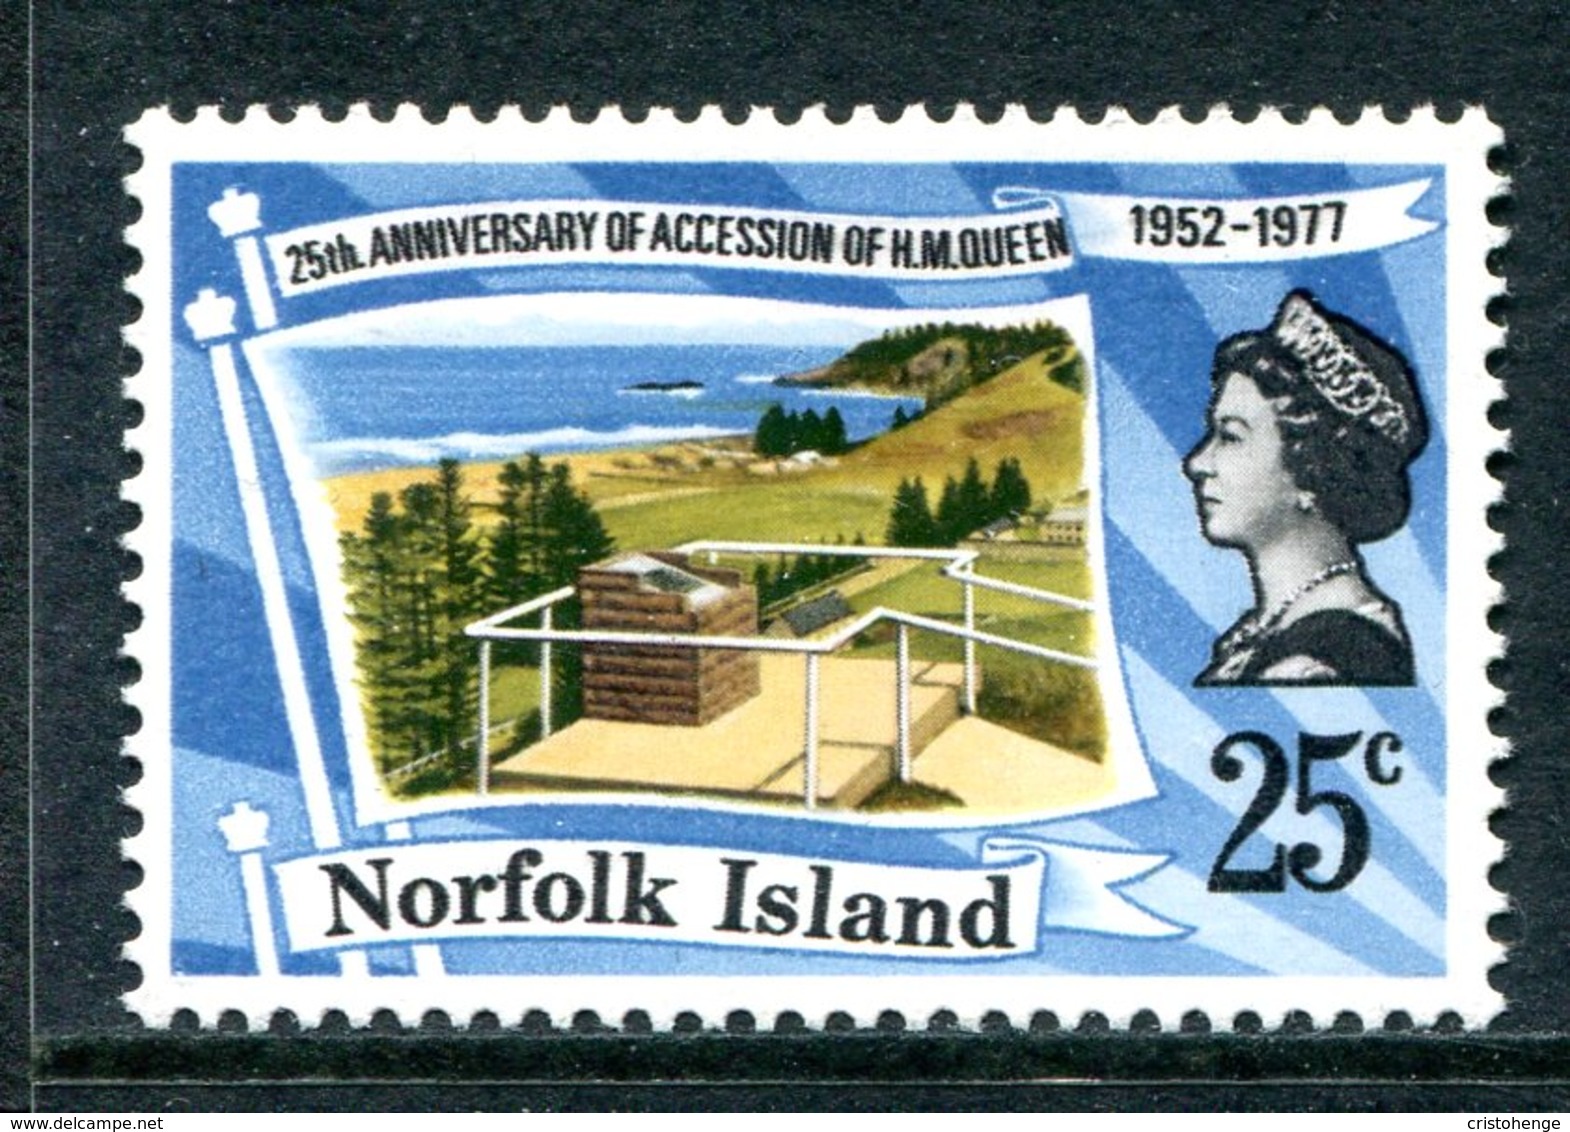 Norfolk Island 1977 QEII Silver Jubilee MNH (SG 196) - Norfolk Island